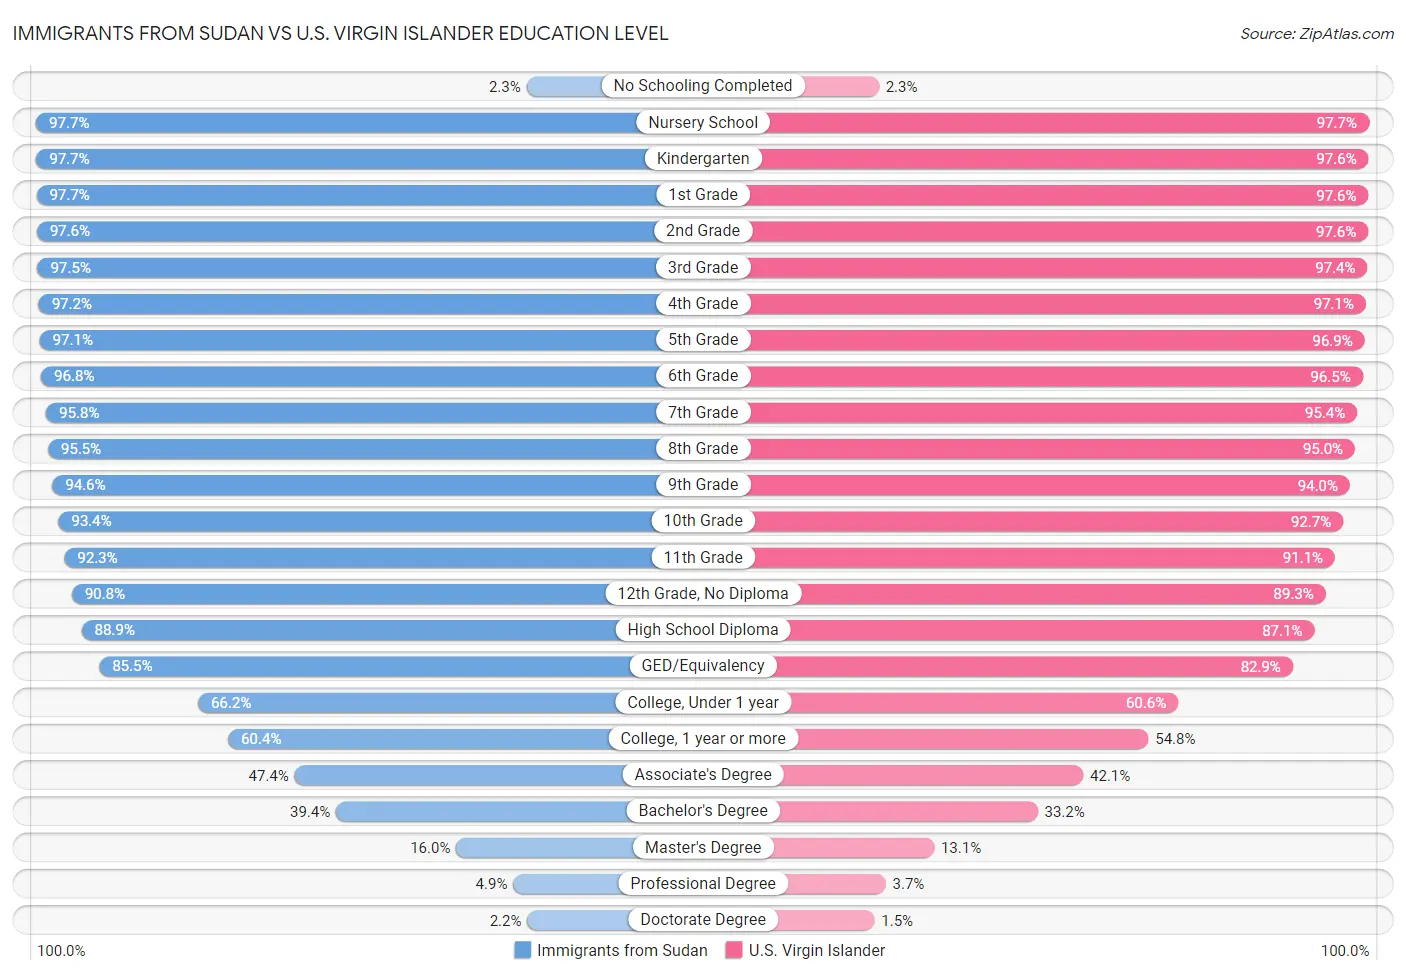 Immigrants from Sudan vs U.S. Virgin Islander Education Level